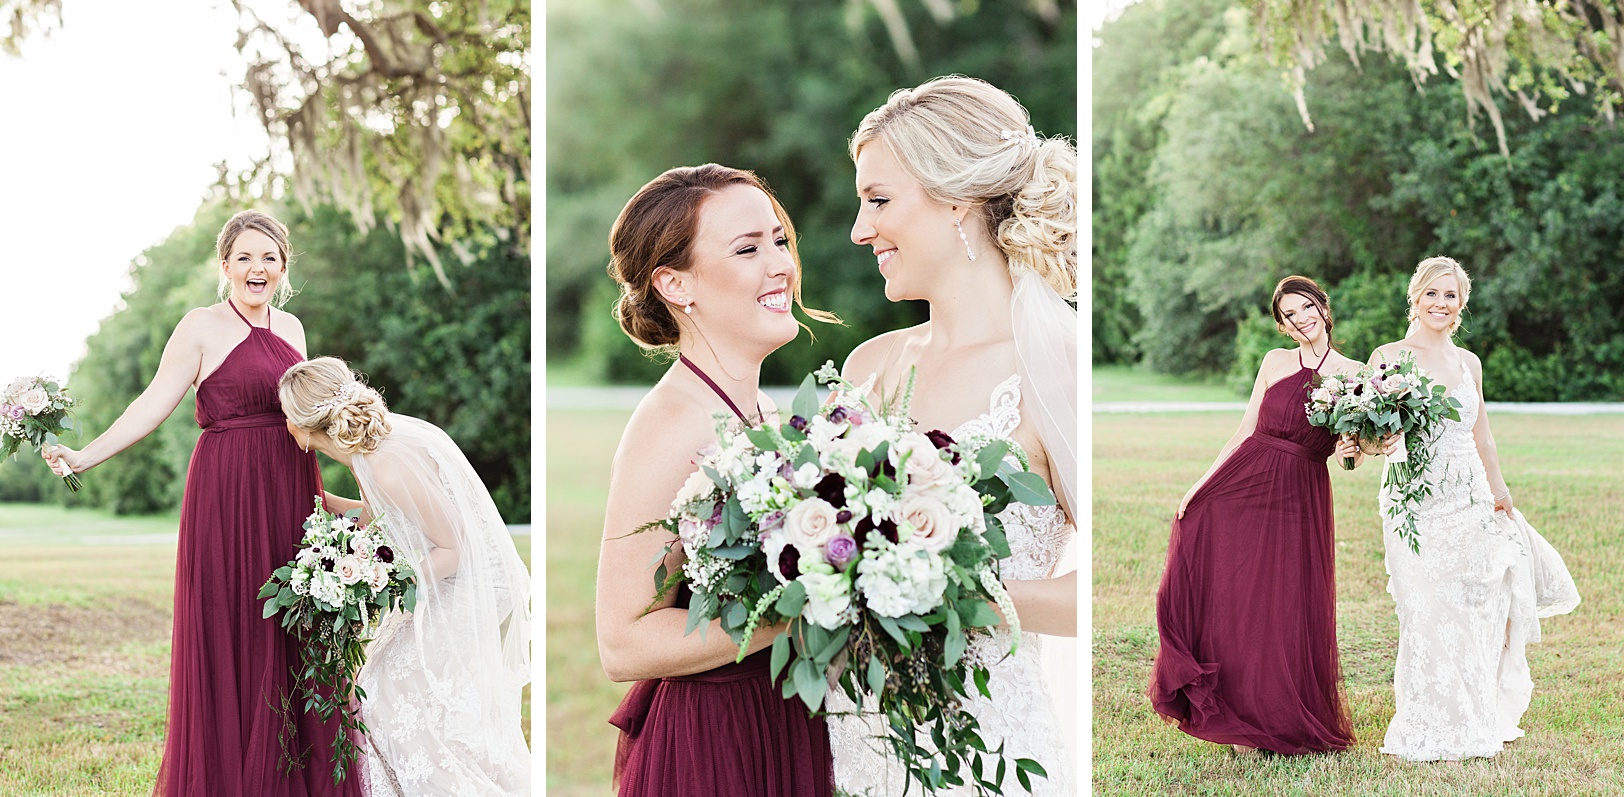 Fun Bridesmaids Portraits | Kaitlin Scott Photography